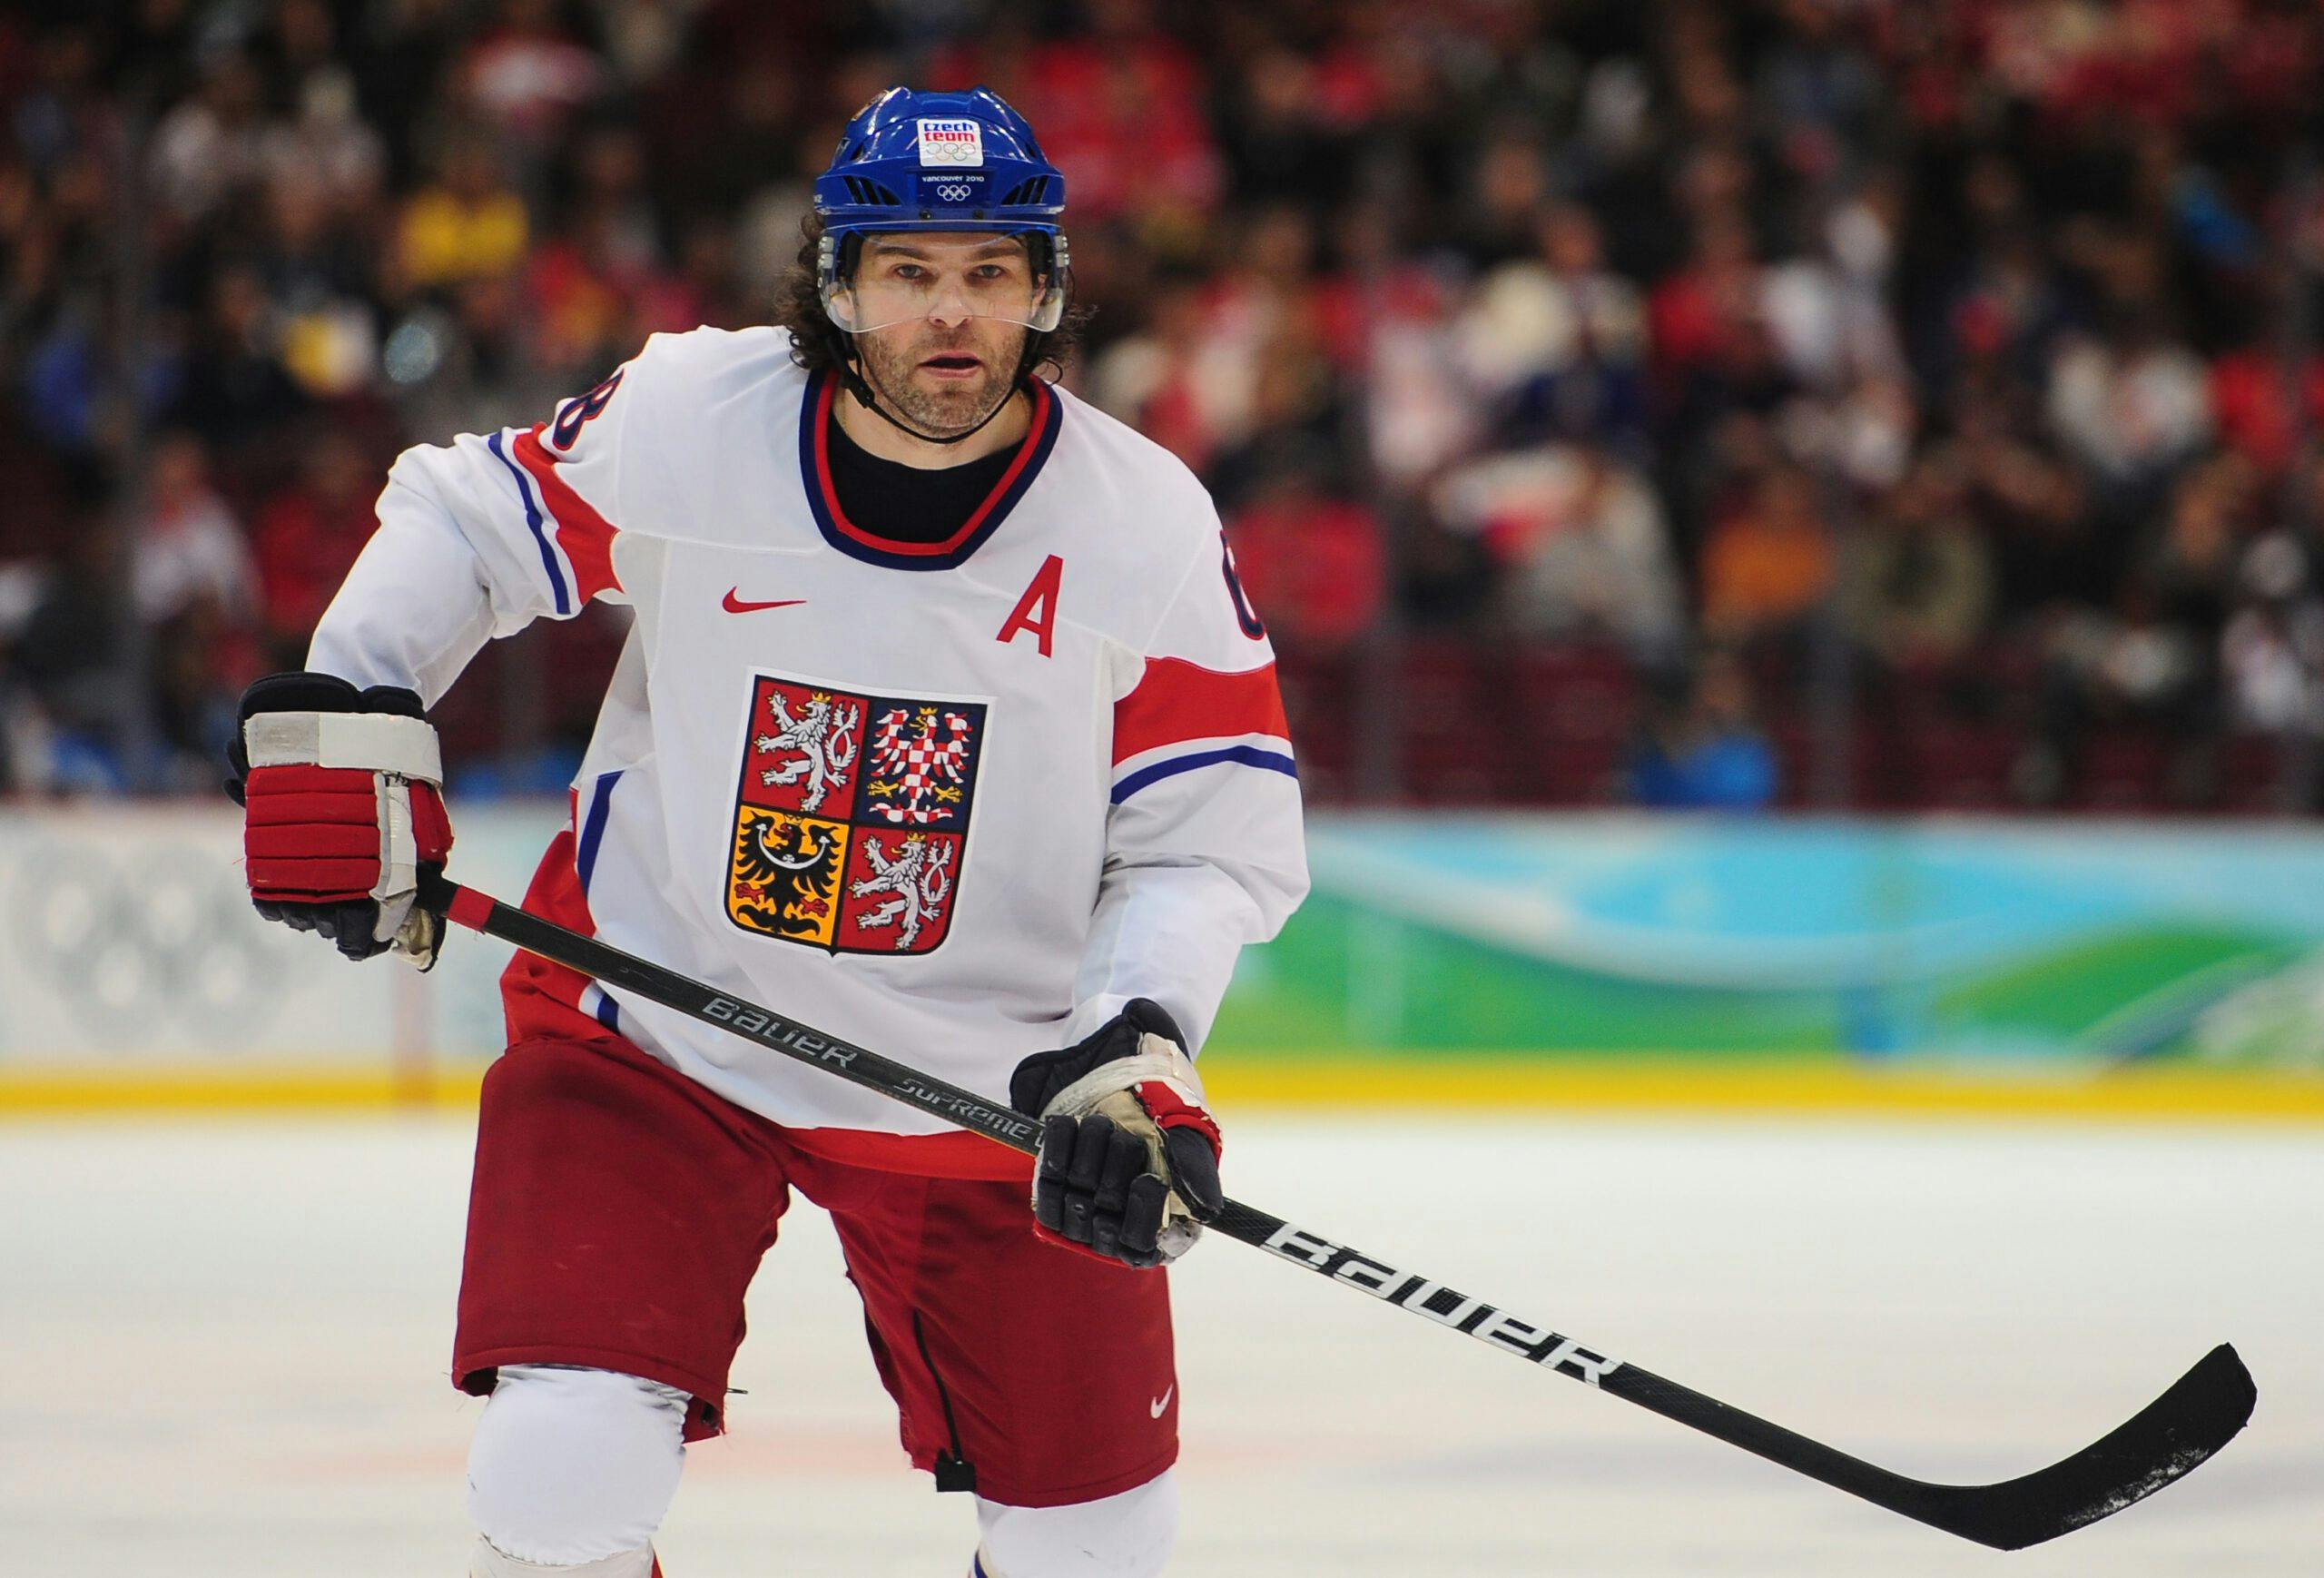 Jaromir Jagr to make hockey return at age of 51 in exhibition game